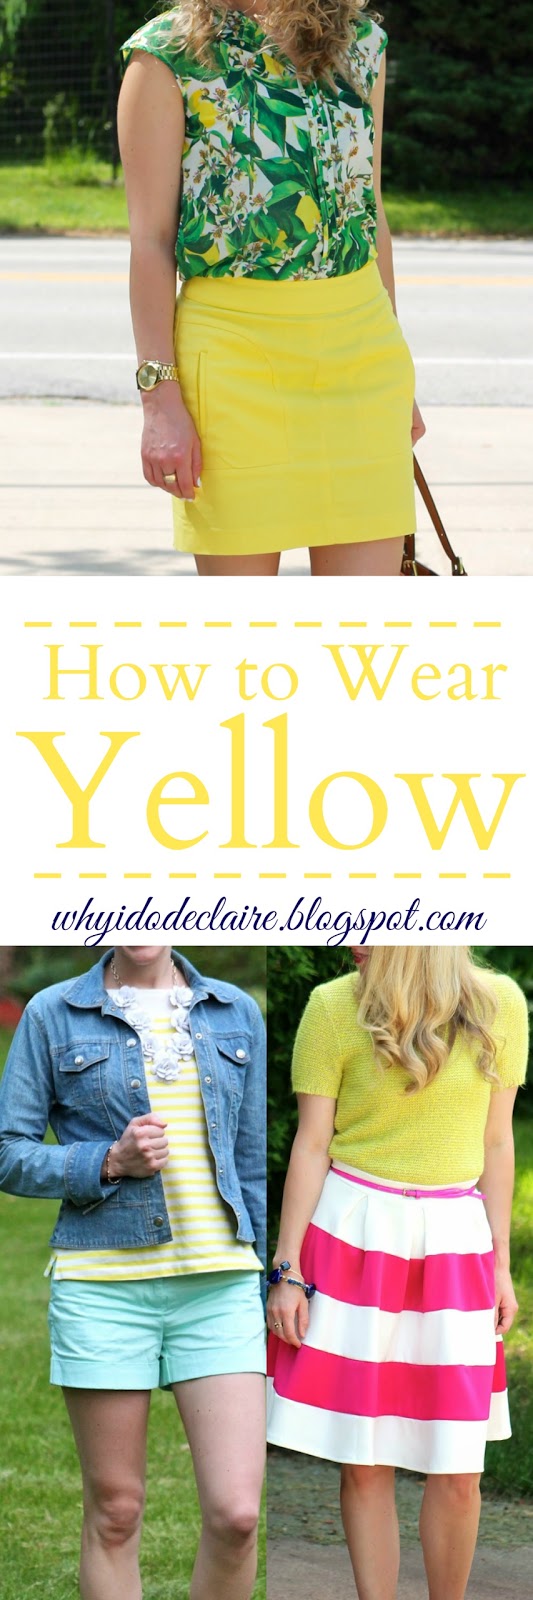 How to Wear Yellow & Confident Twosday